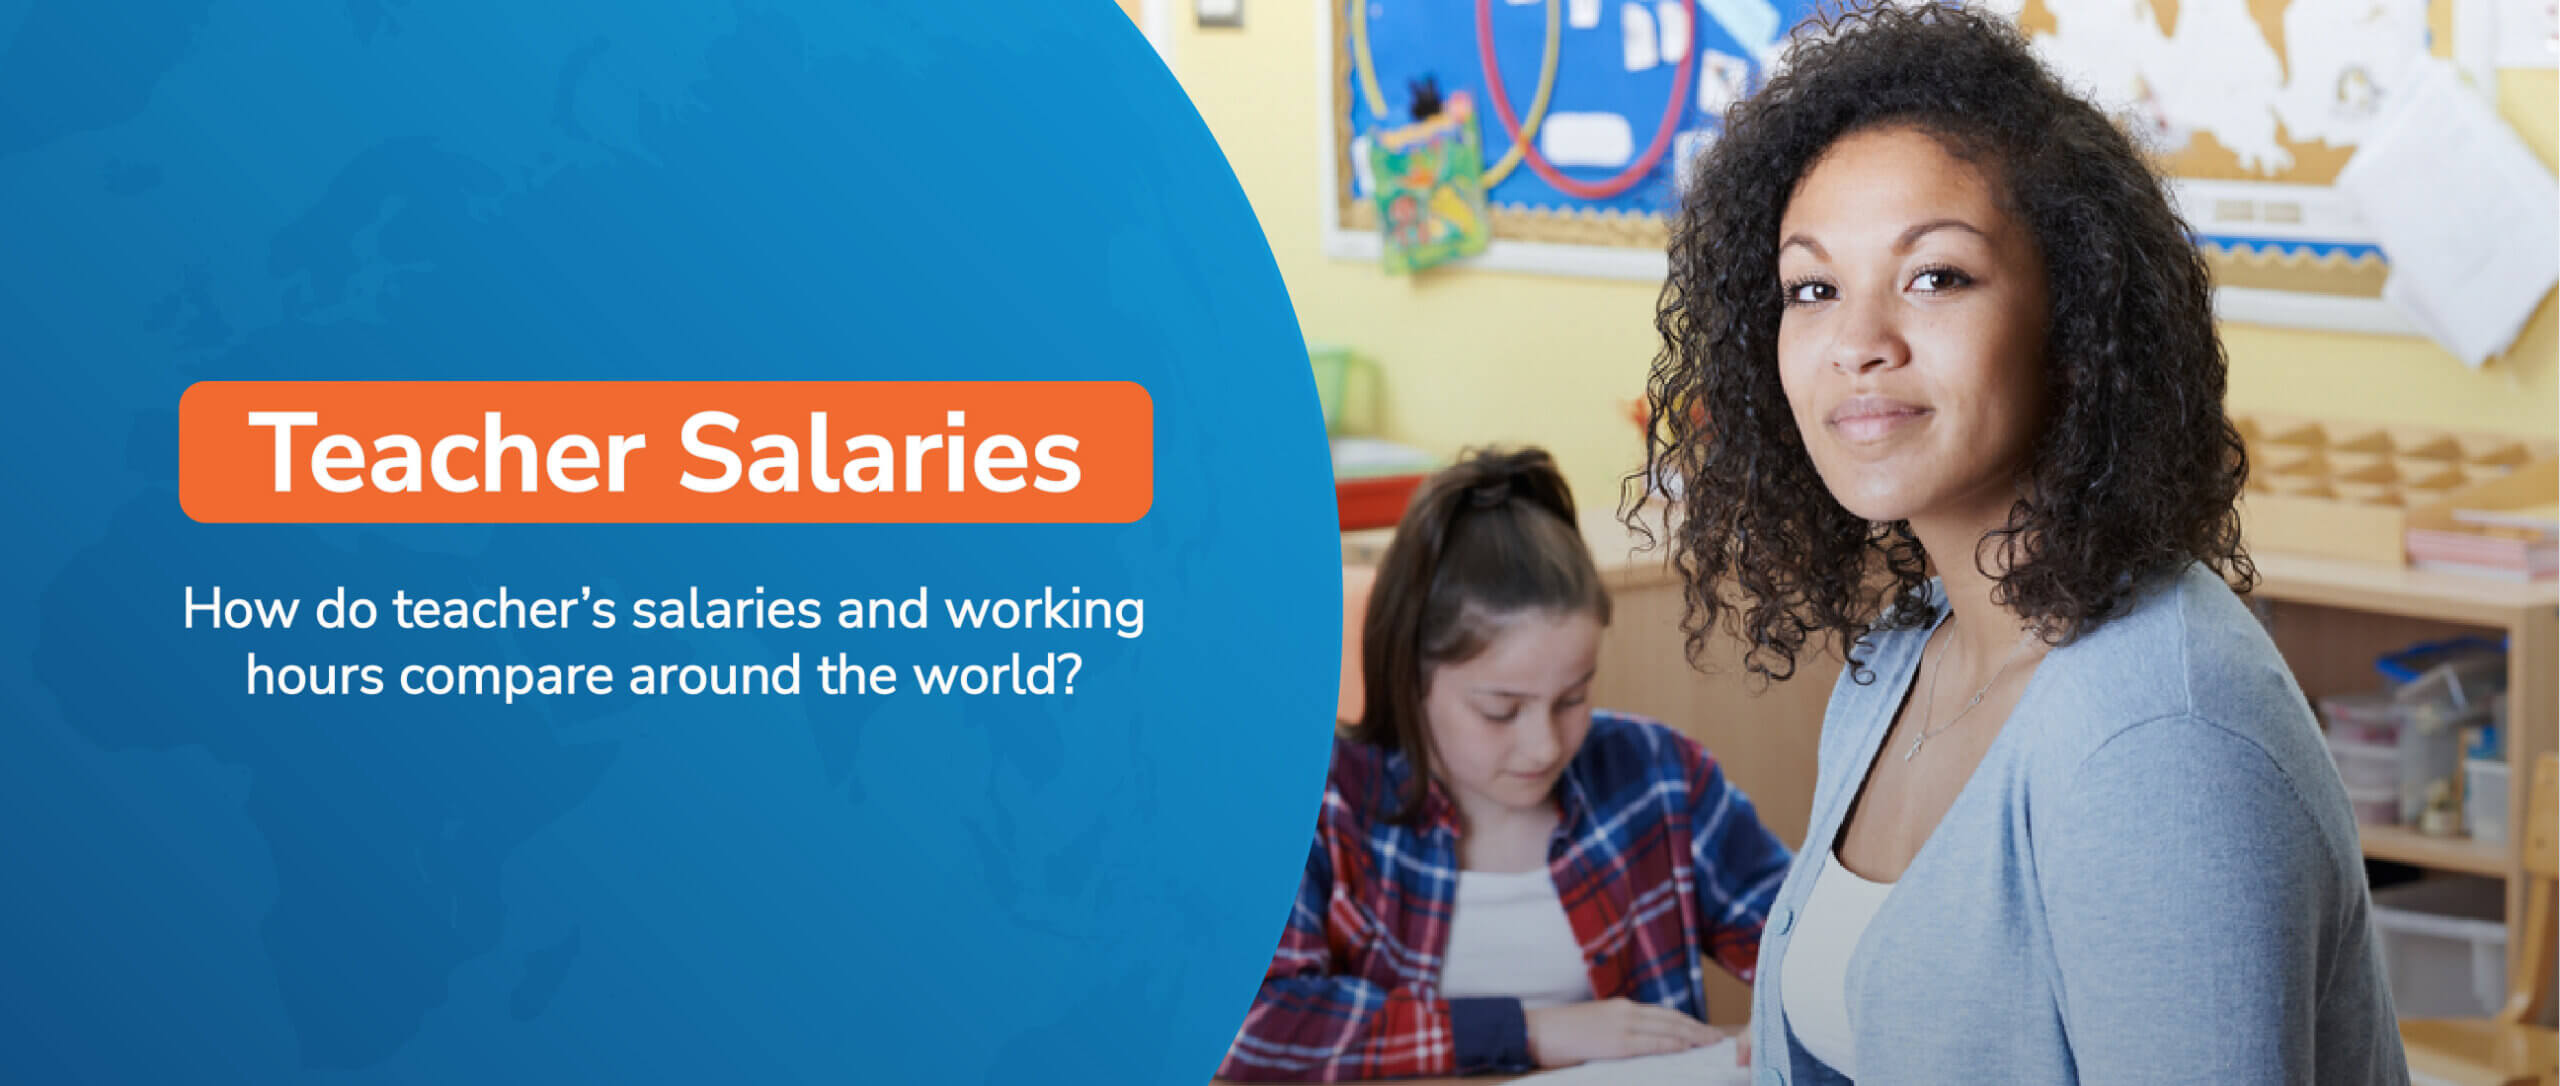 teacher salaries across the globe